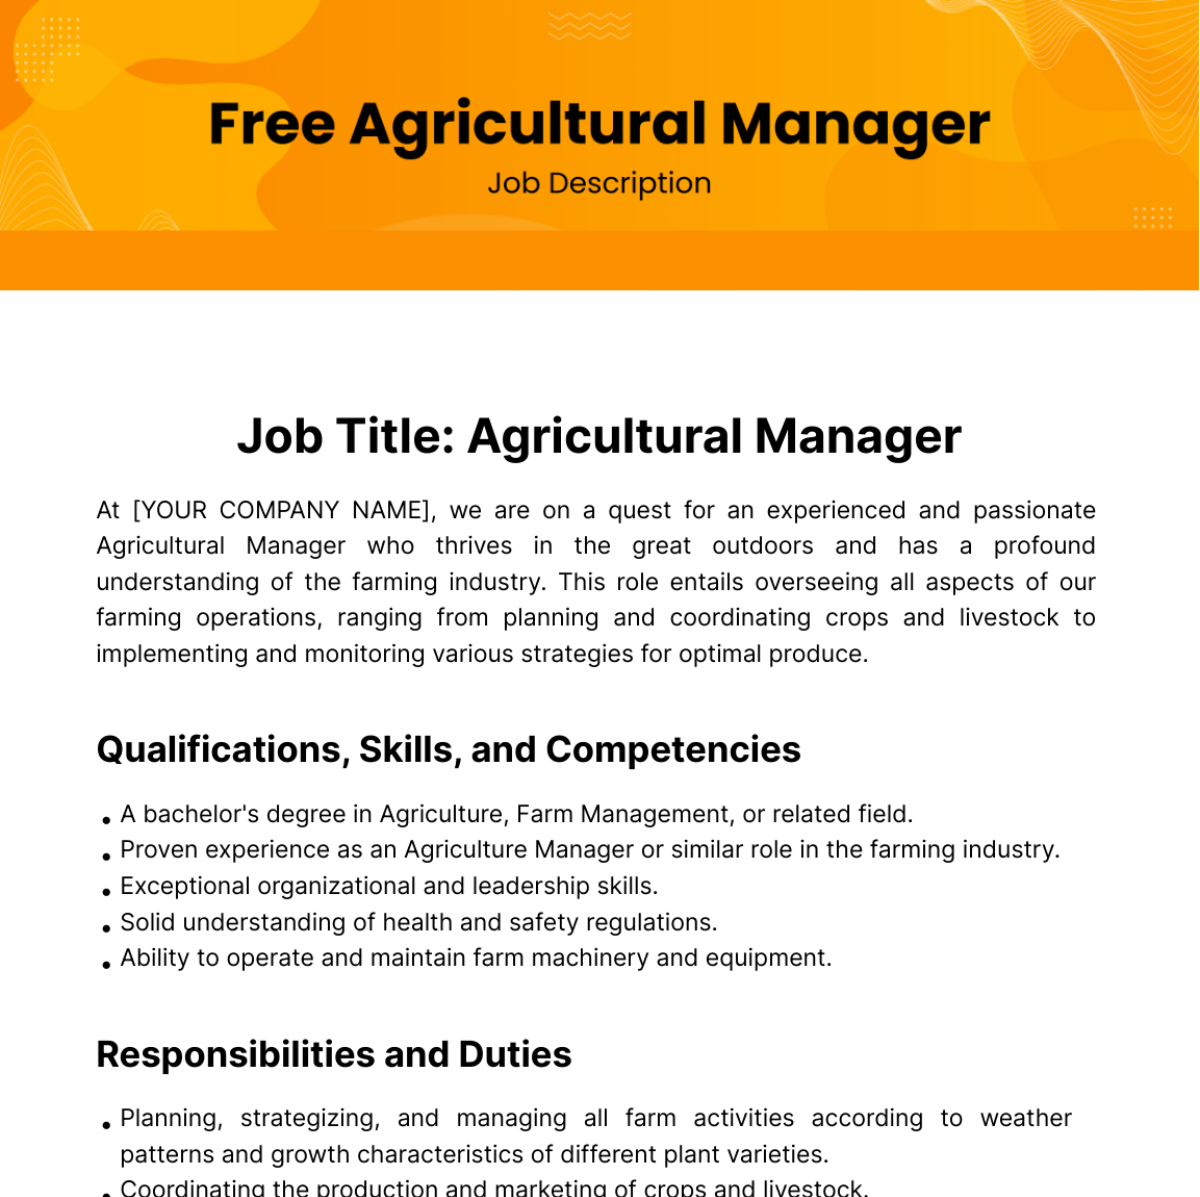 Free Agricultural Manager Job Description Template